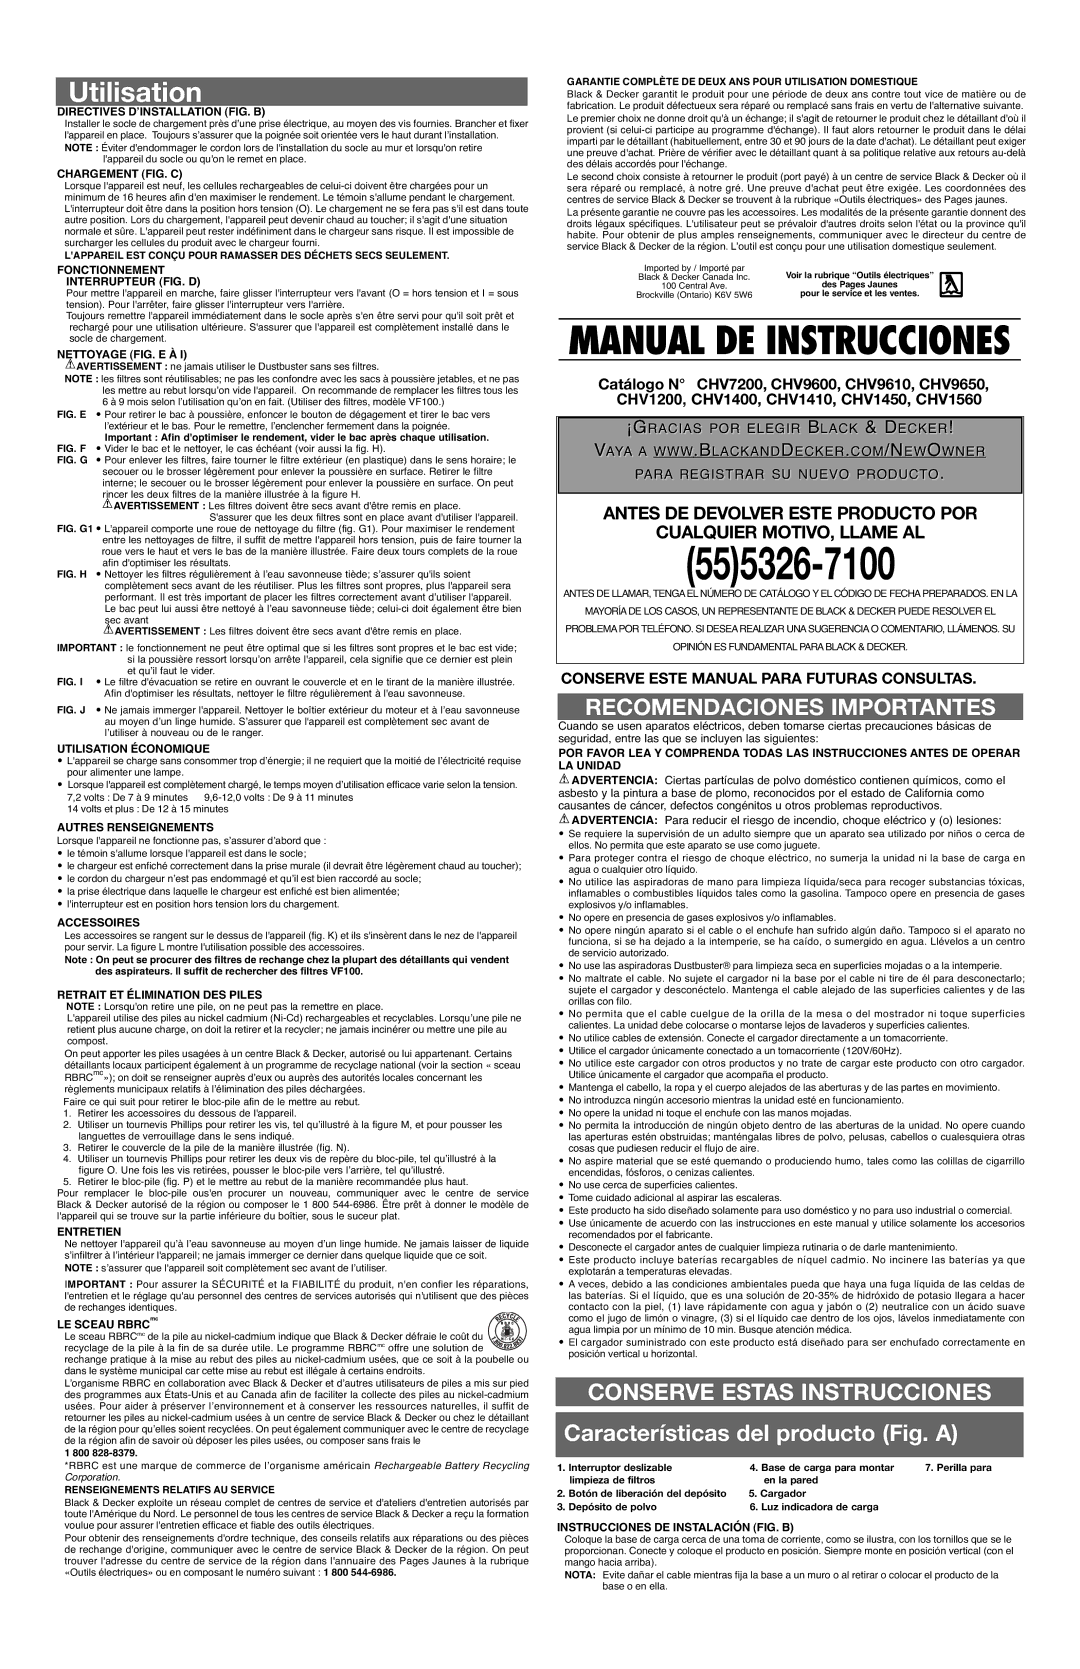 Black & Decker CHV7200 Directives D’INSTALLATION FIG. B, Chargement FIG. C, Fonctionnement Interrupteur FIG. D, Entretien 